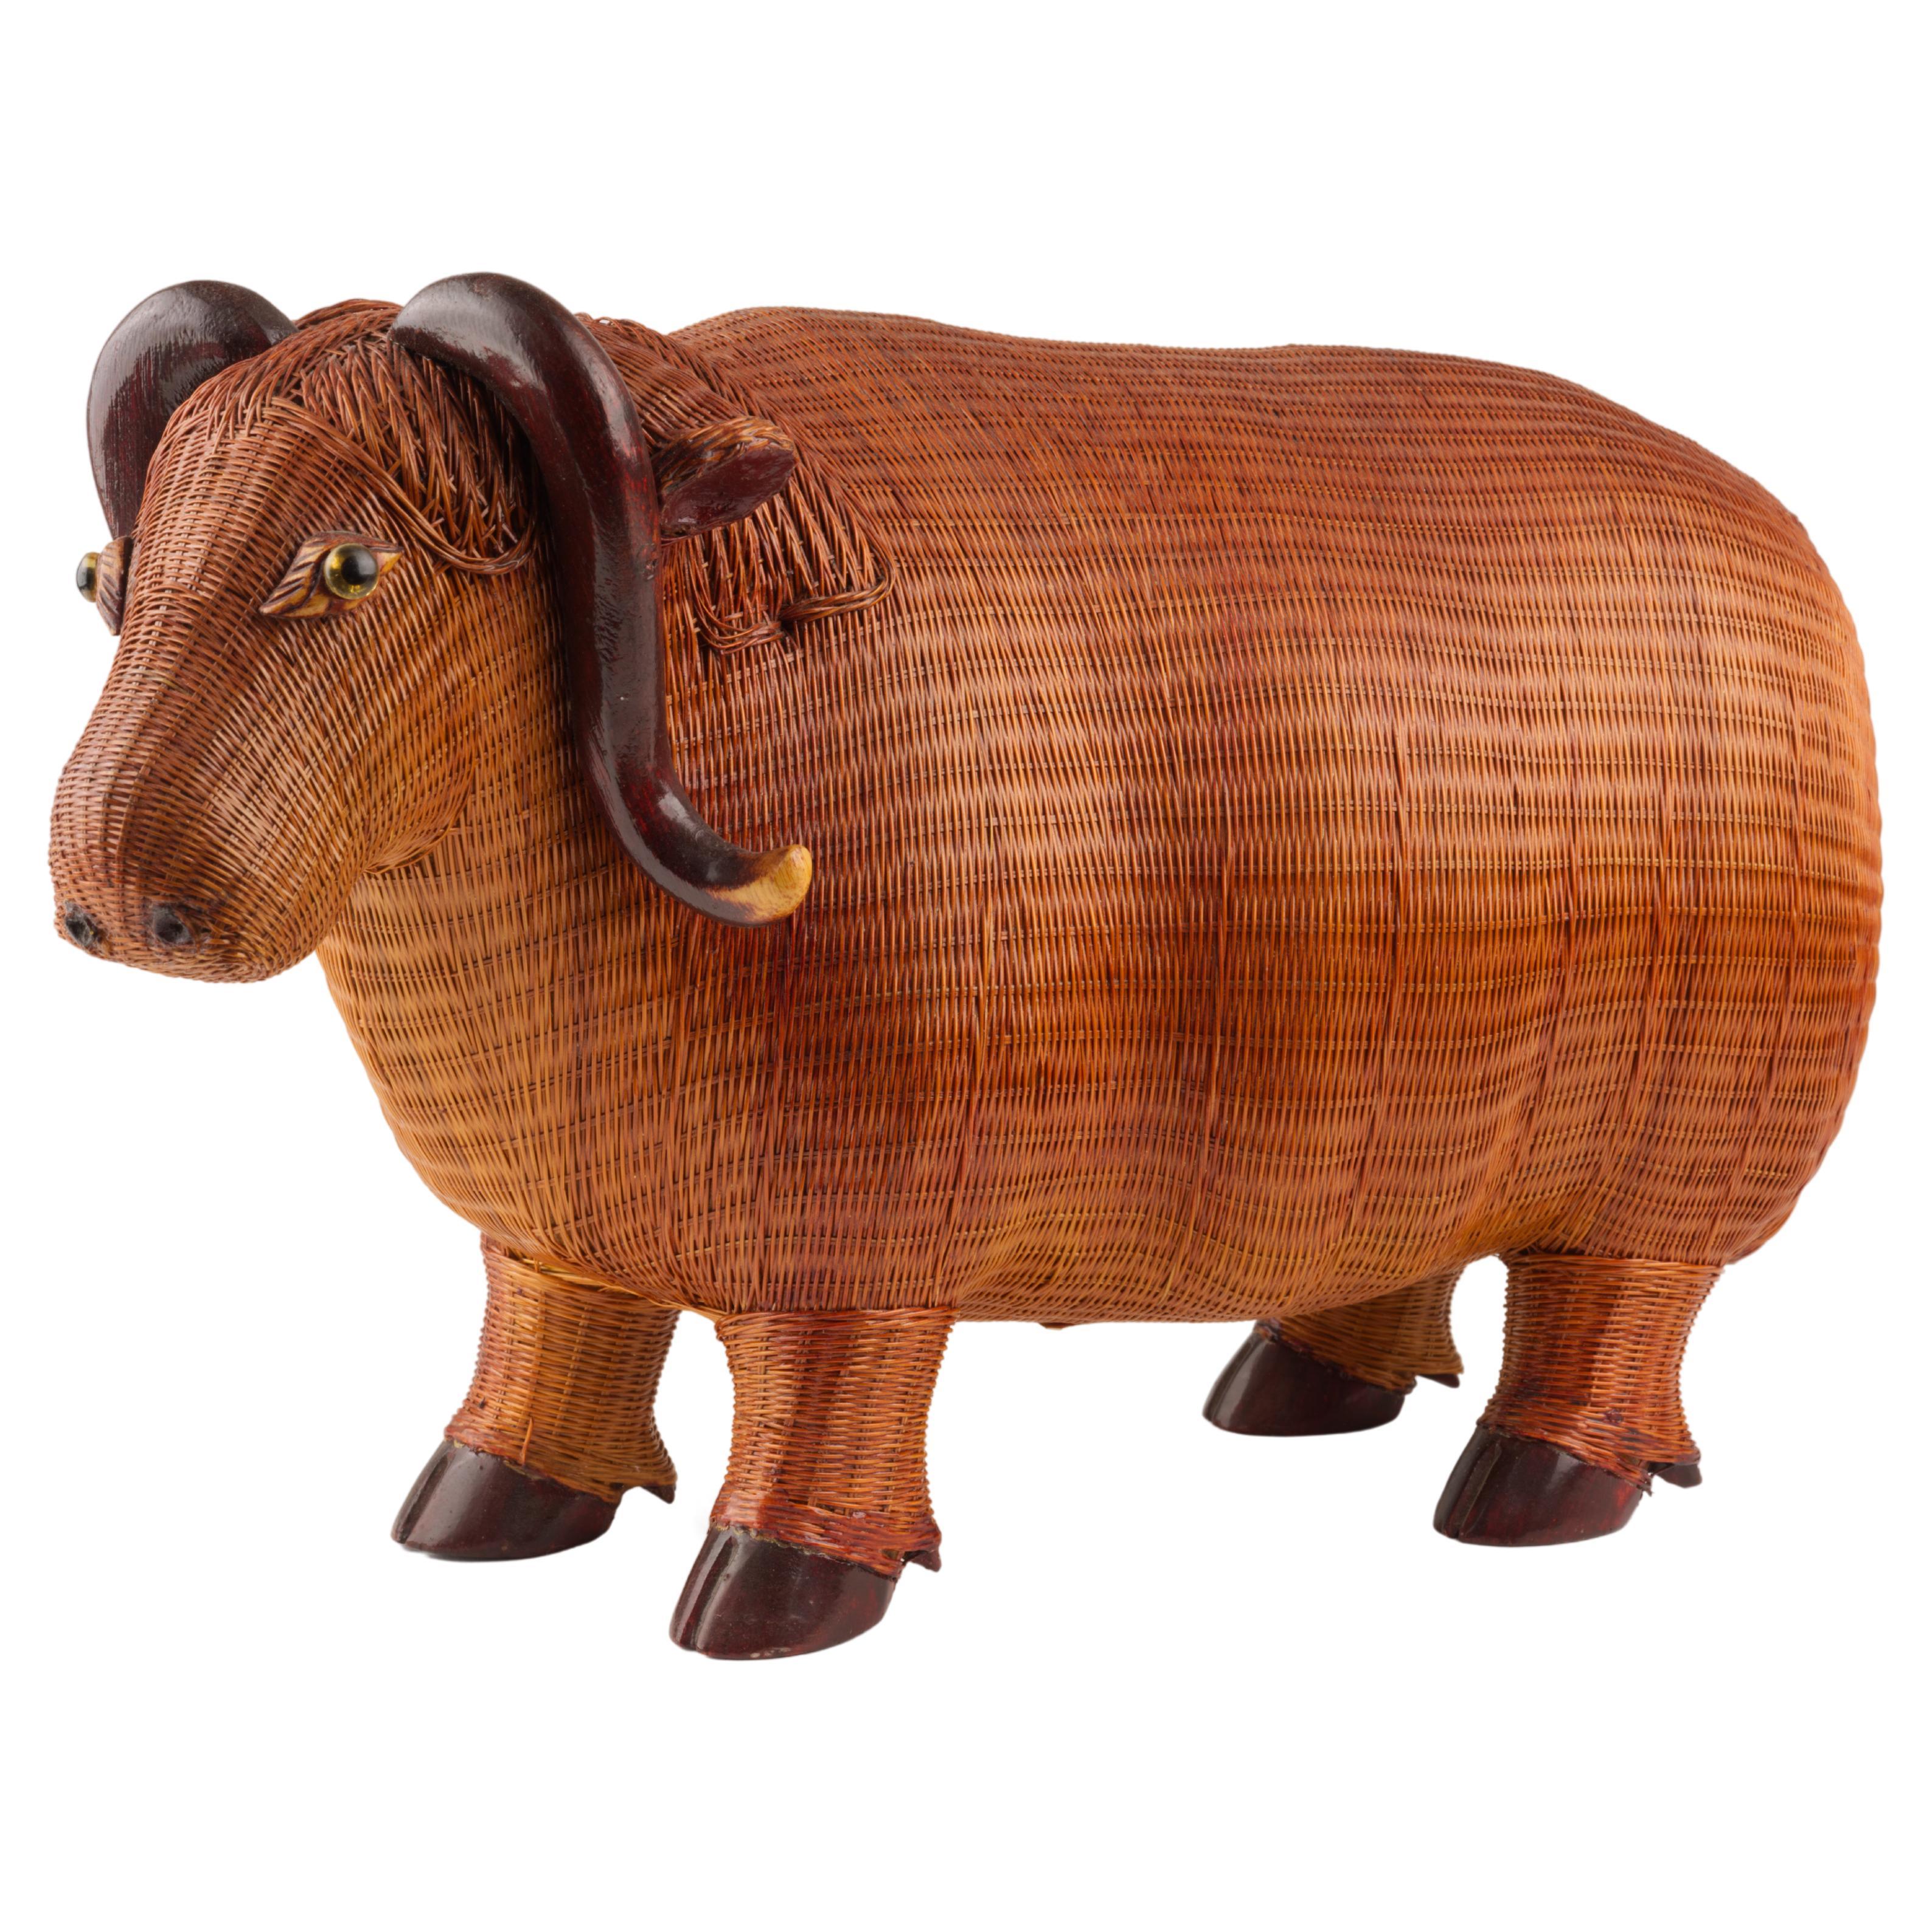 Wicker Water Buffalo Figurine by Shanghai Handicrafts For Sale